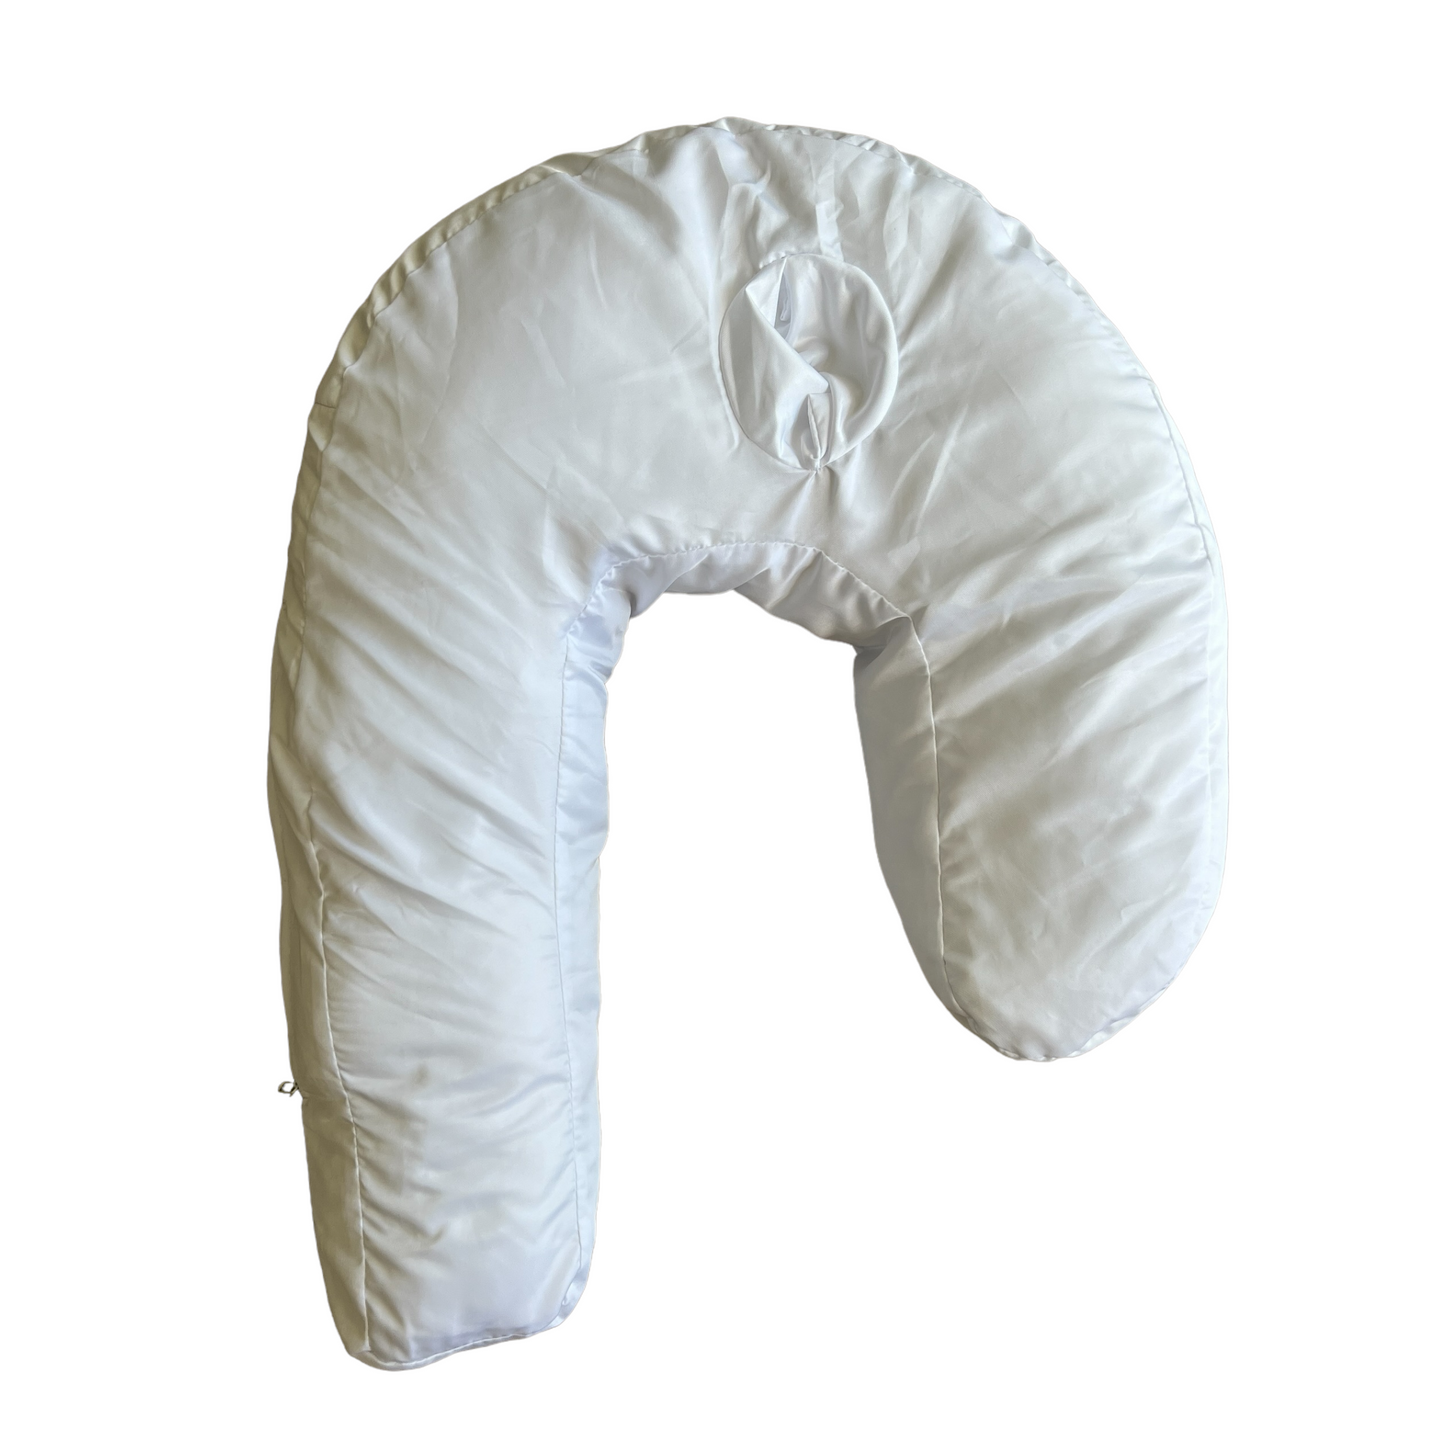 Newest U-Shaped Pillow Plus Side Sleeper